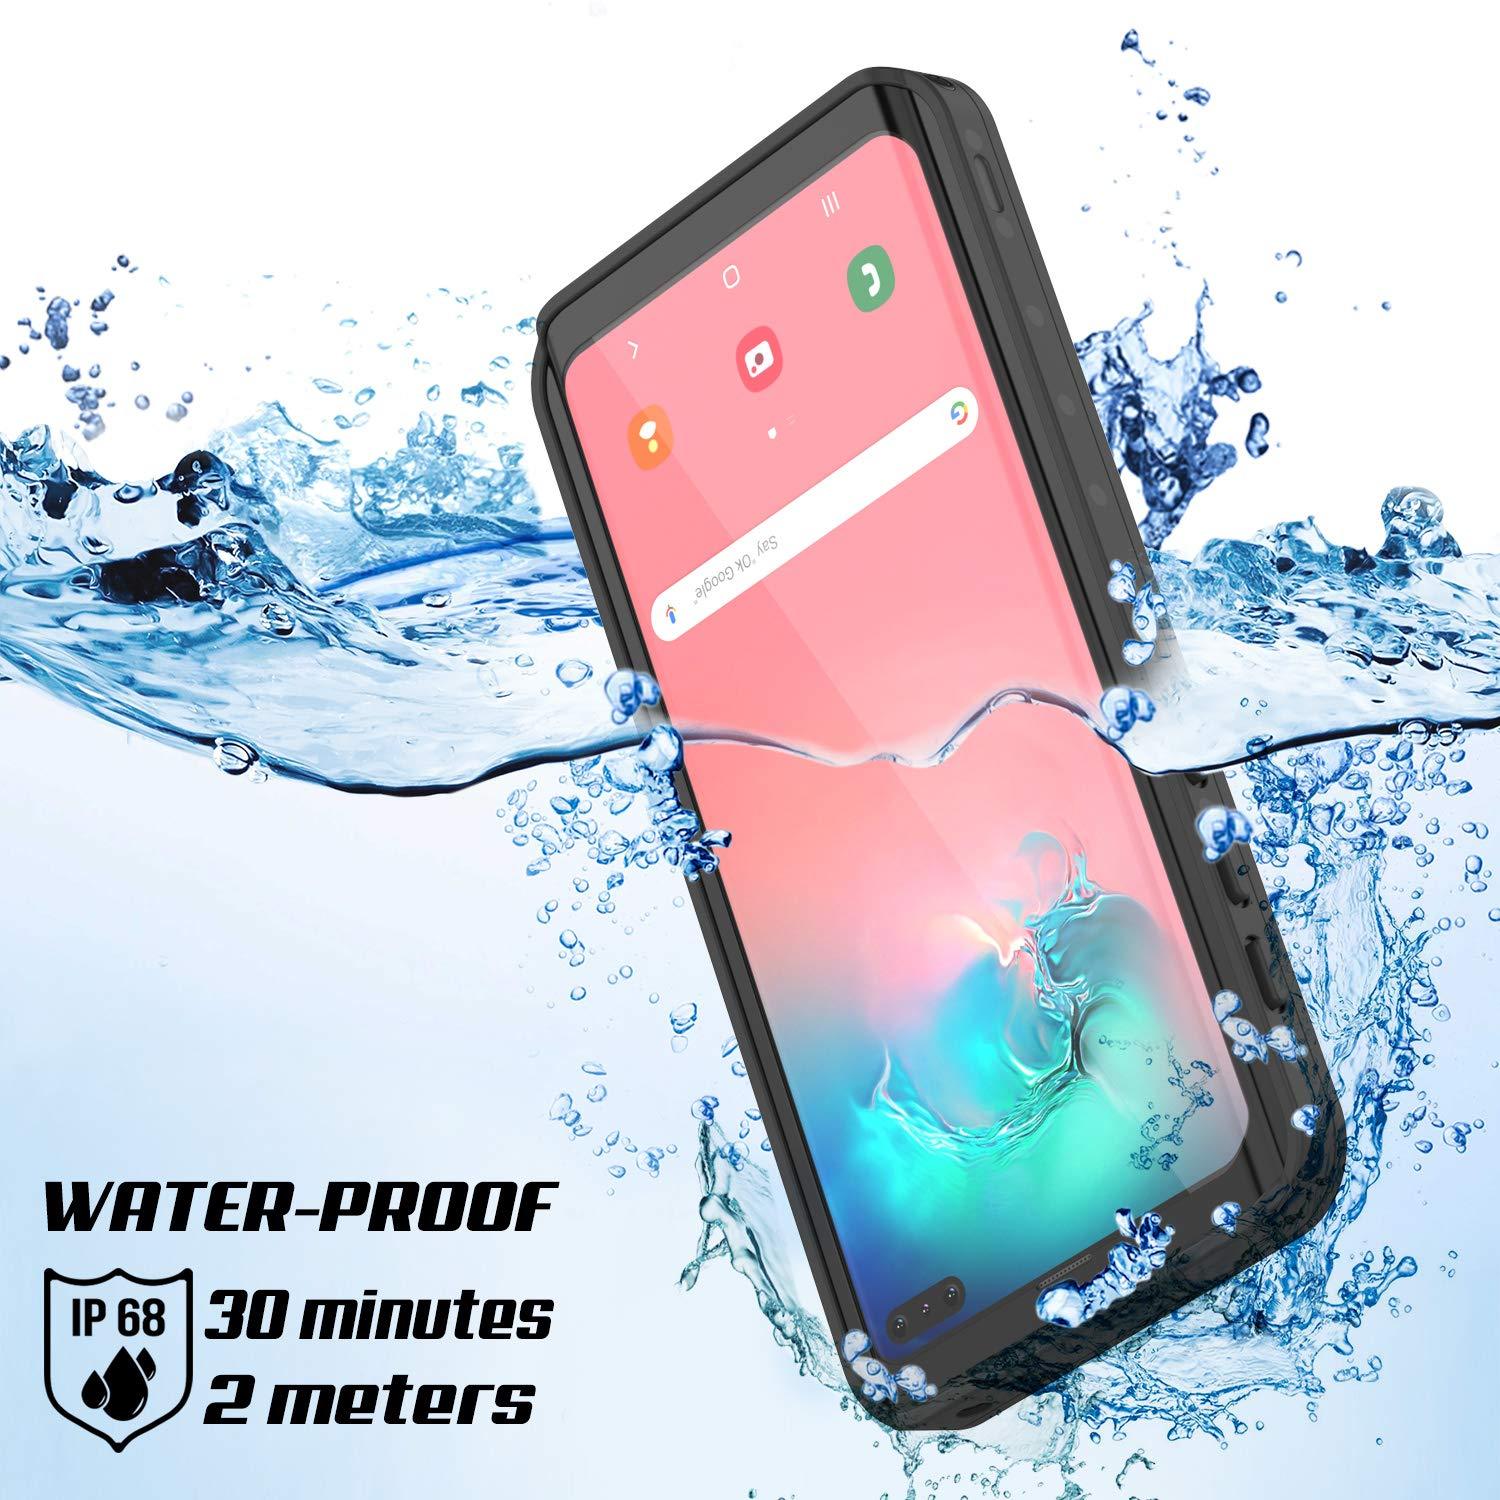 Galaxy S10 5G Waterproof Case PunkCase StudStar Black Thin 6.6ft Underwater IP68 Shock/Snow Proof